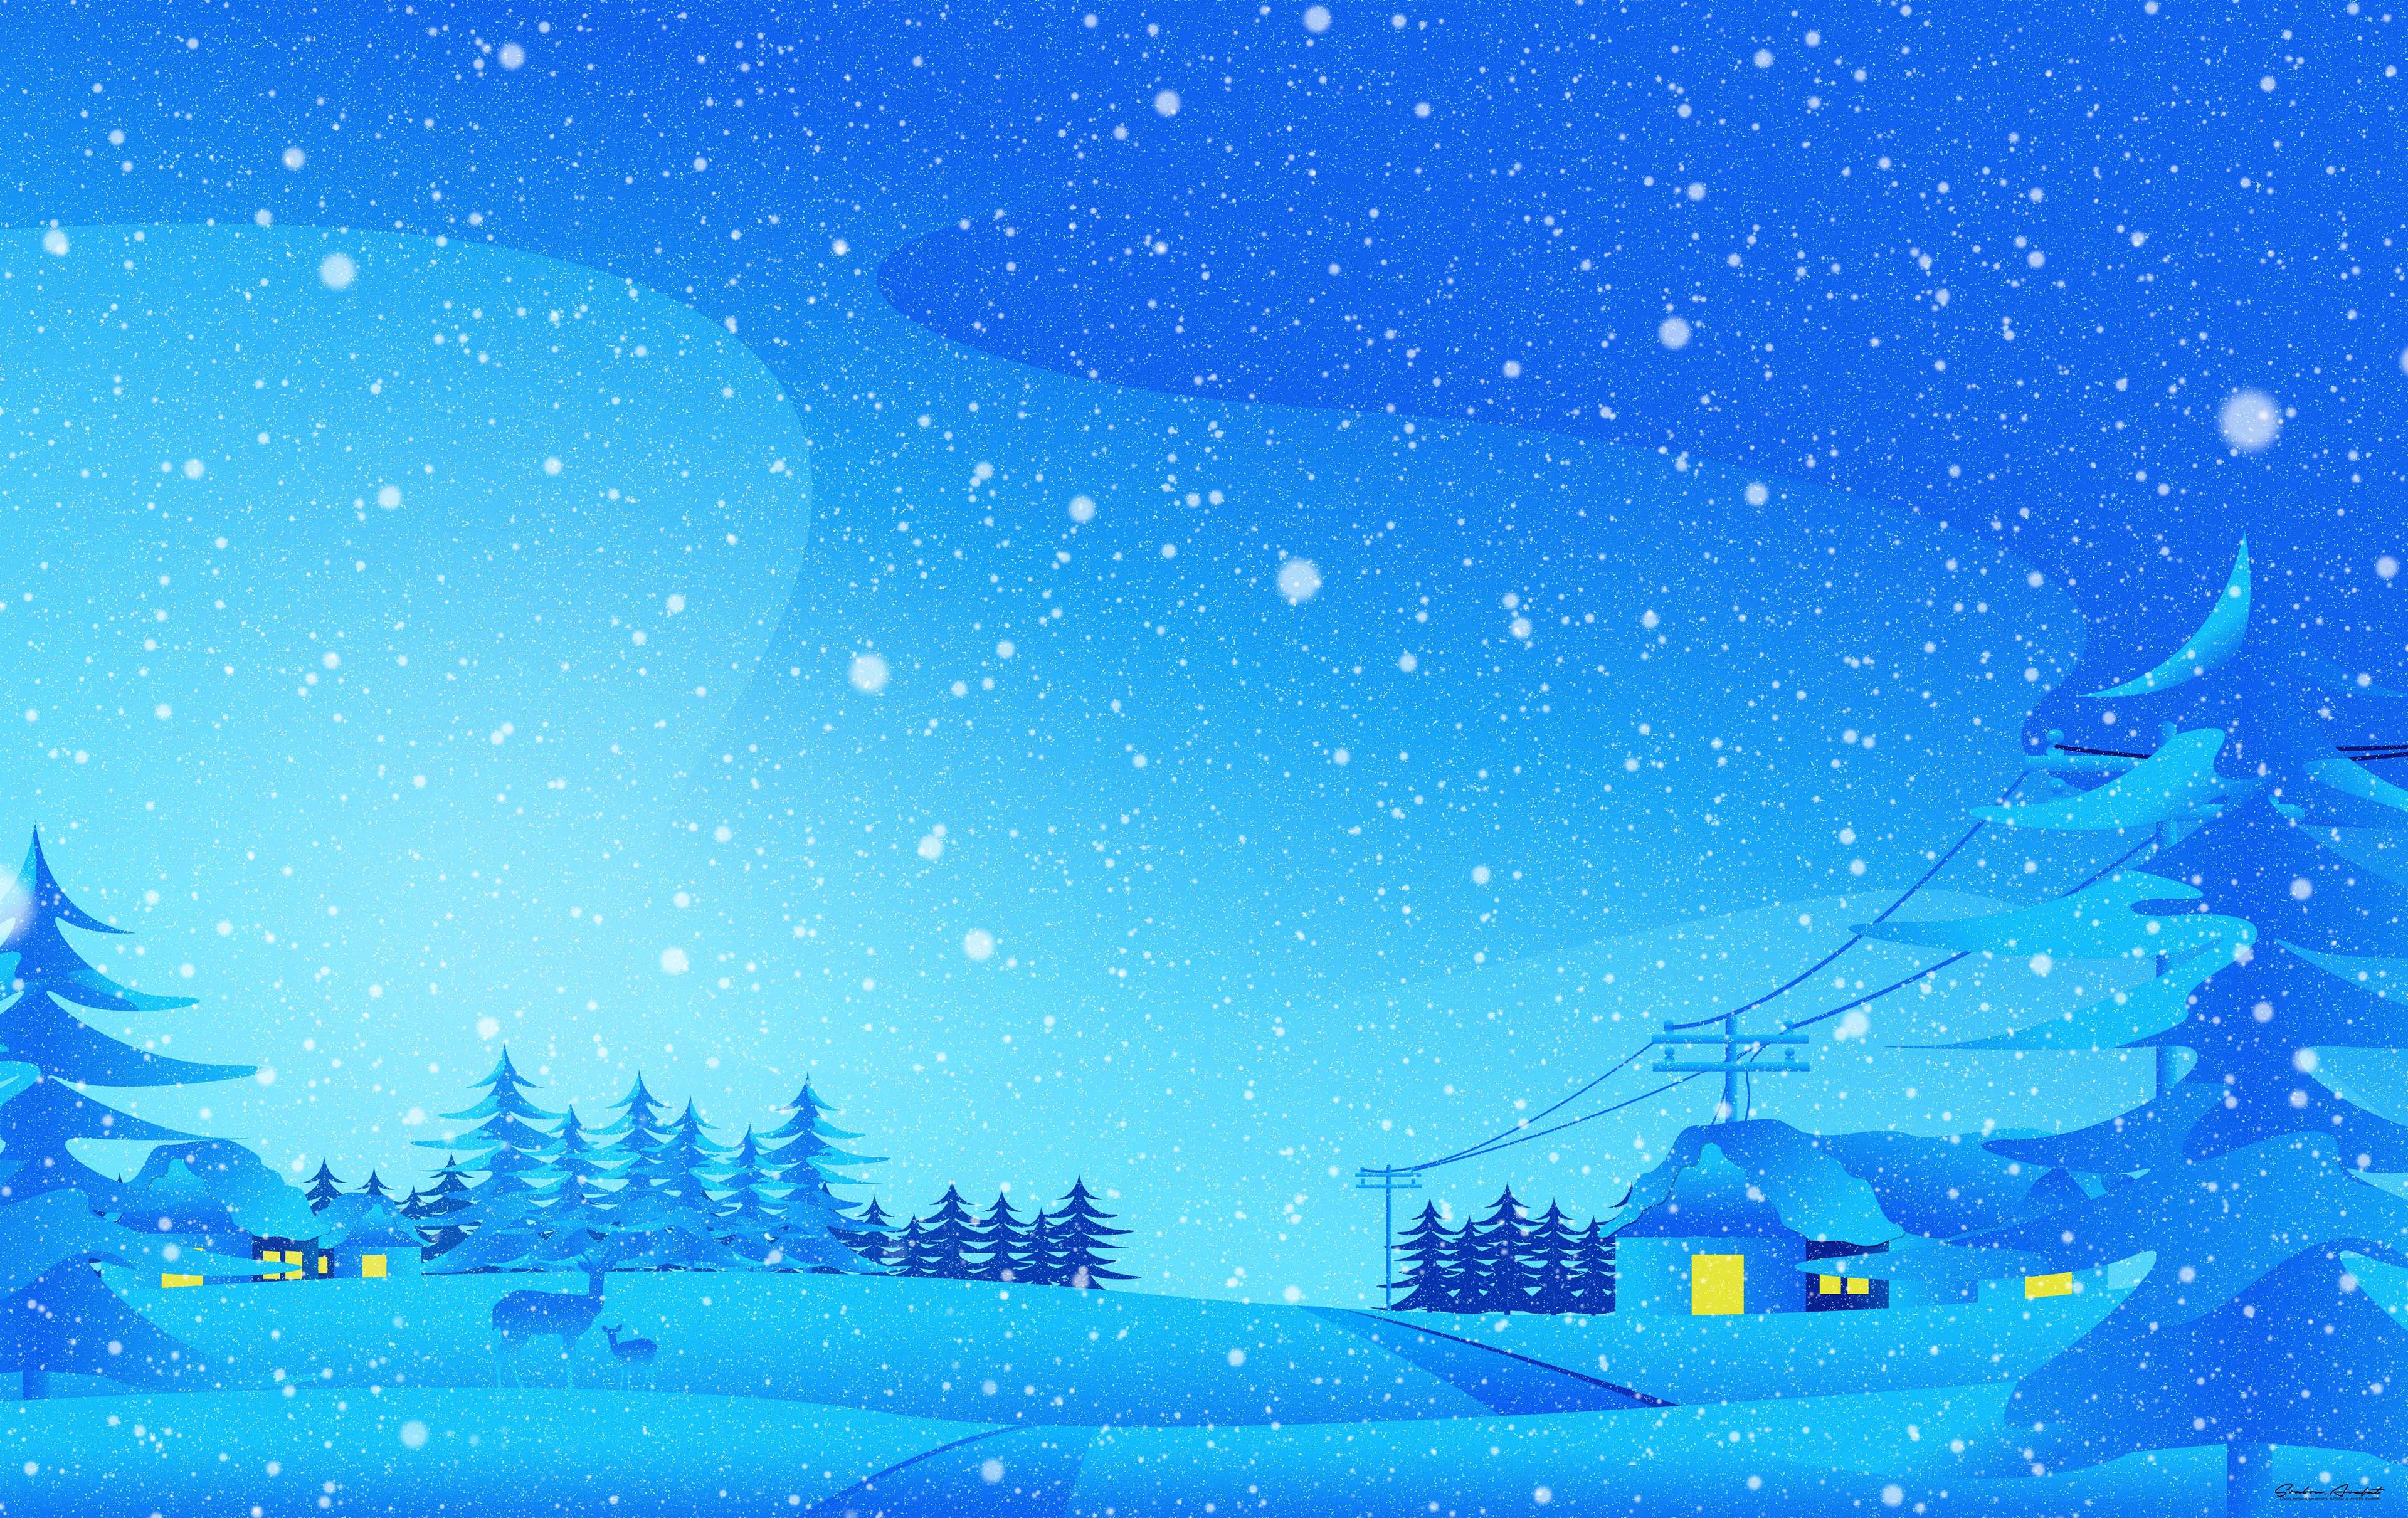 December Winter Digital Art, HD Artist, 4k Wallpaper, Image, Background, Photo and Picture